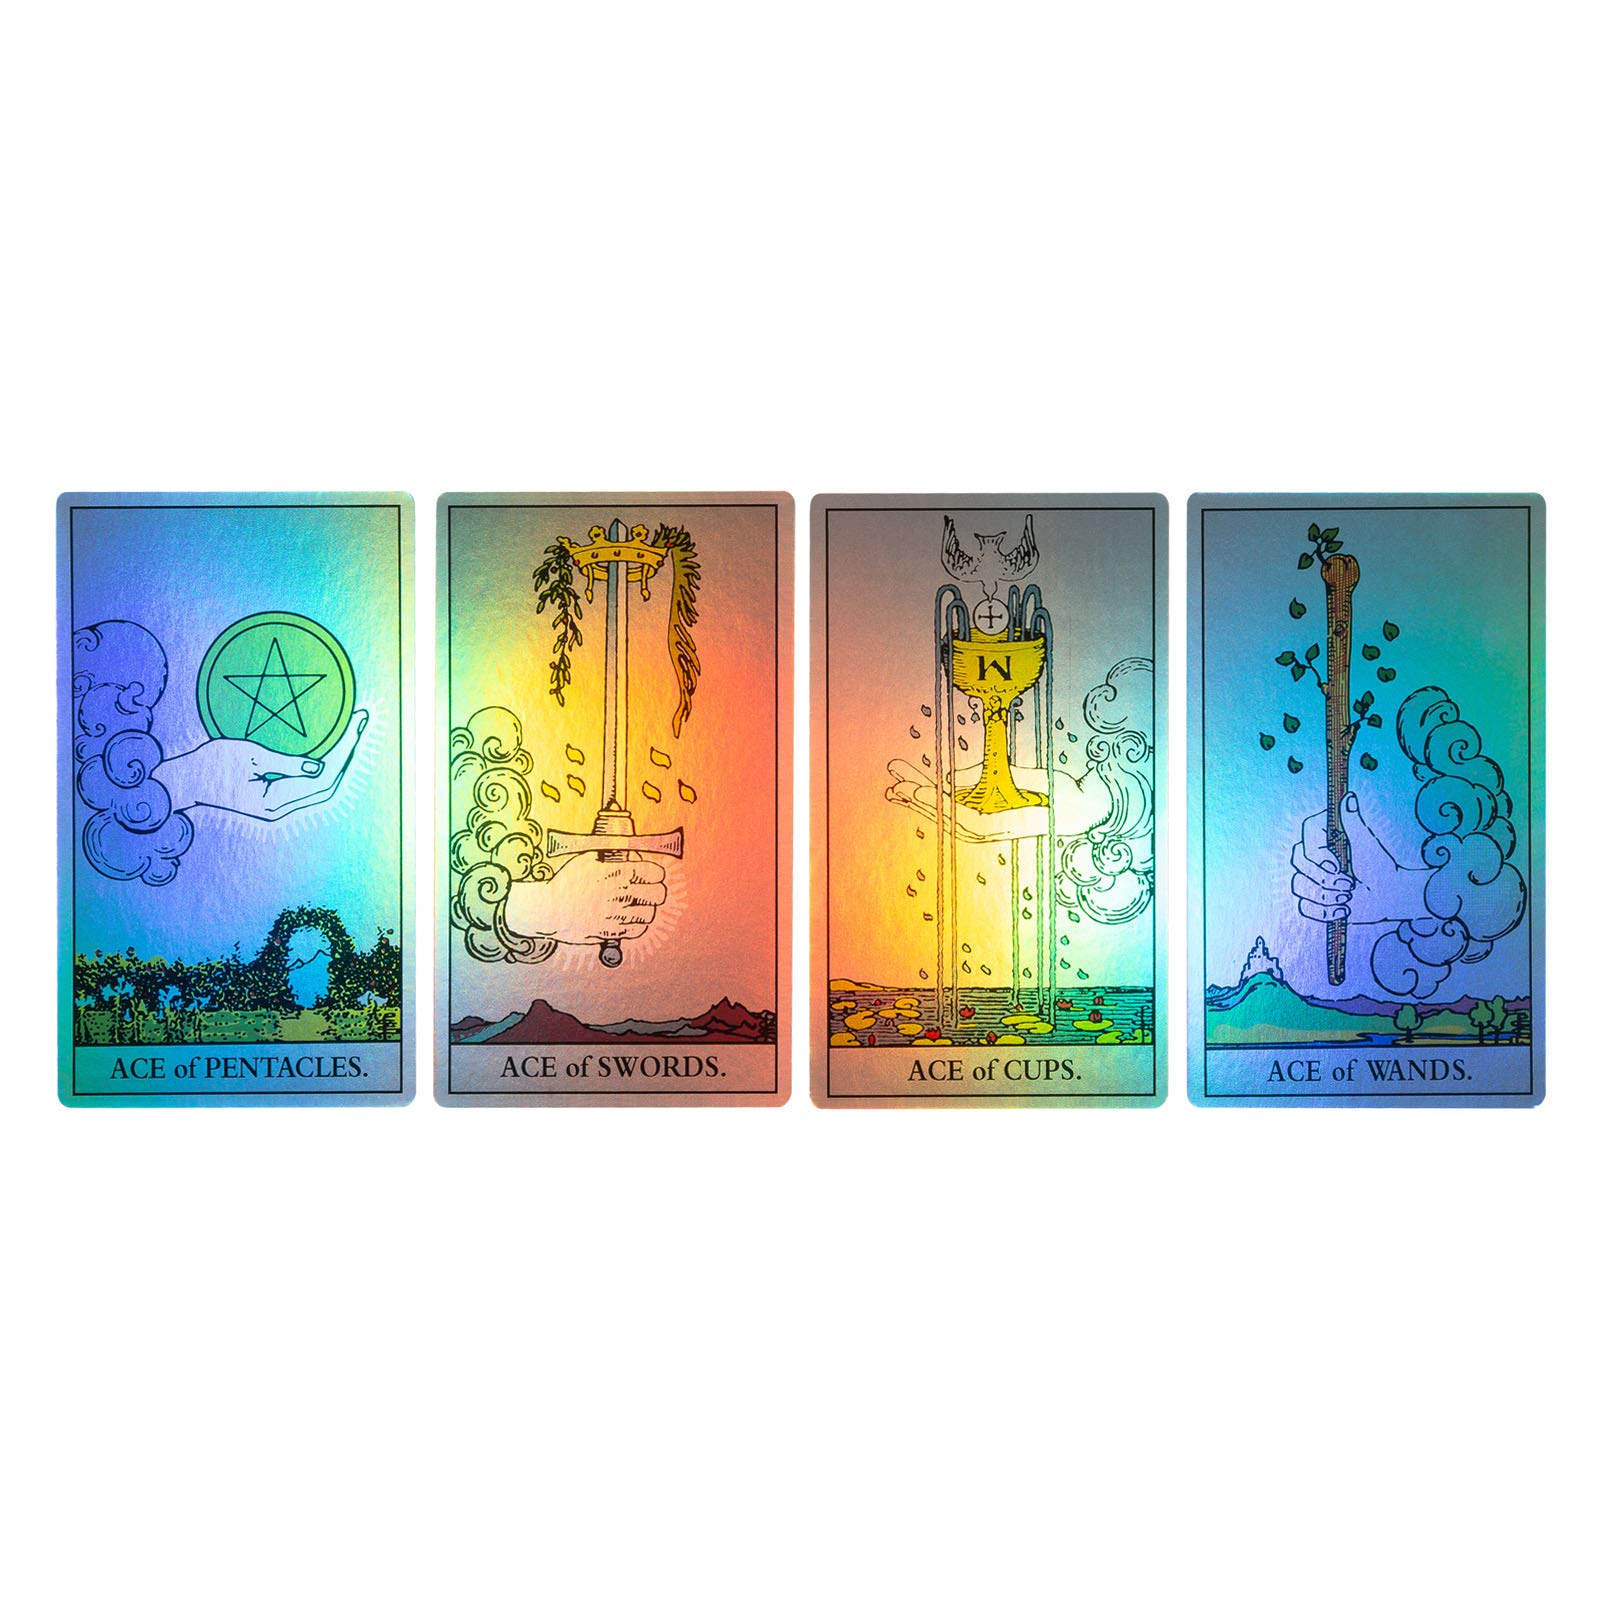 MagicSeer Rainbow Tarot Cards Decks, Tarot Card and Book Sets for Beginners, Holographic Tarot Deck